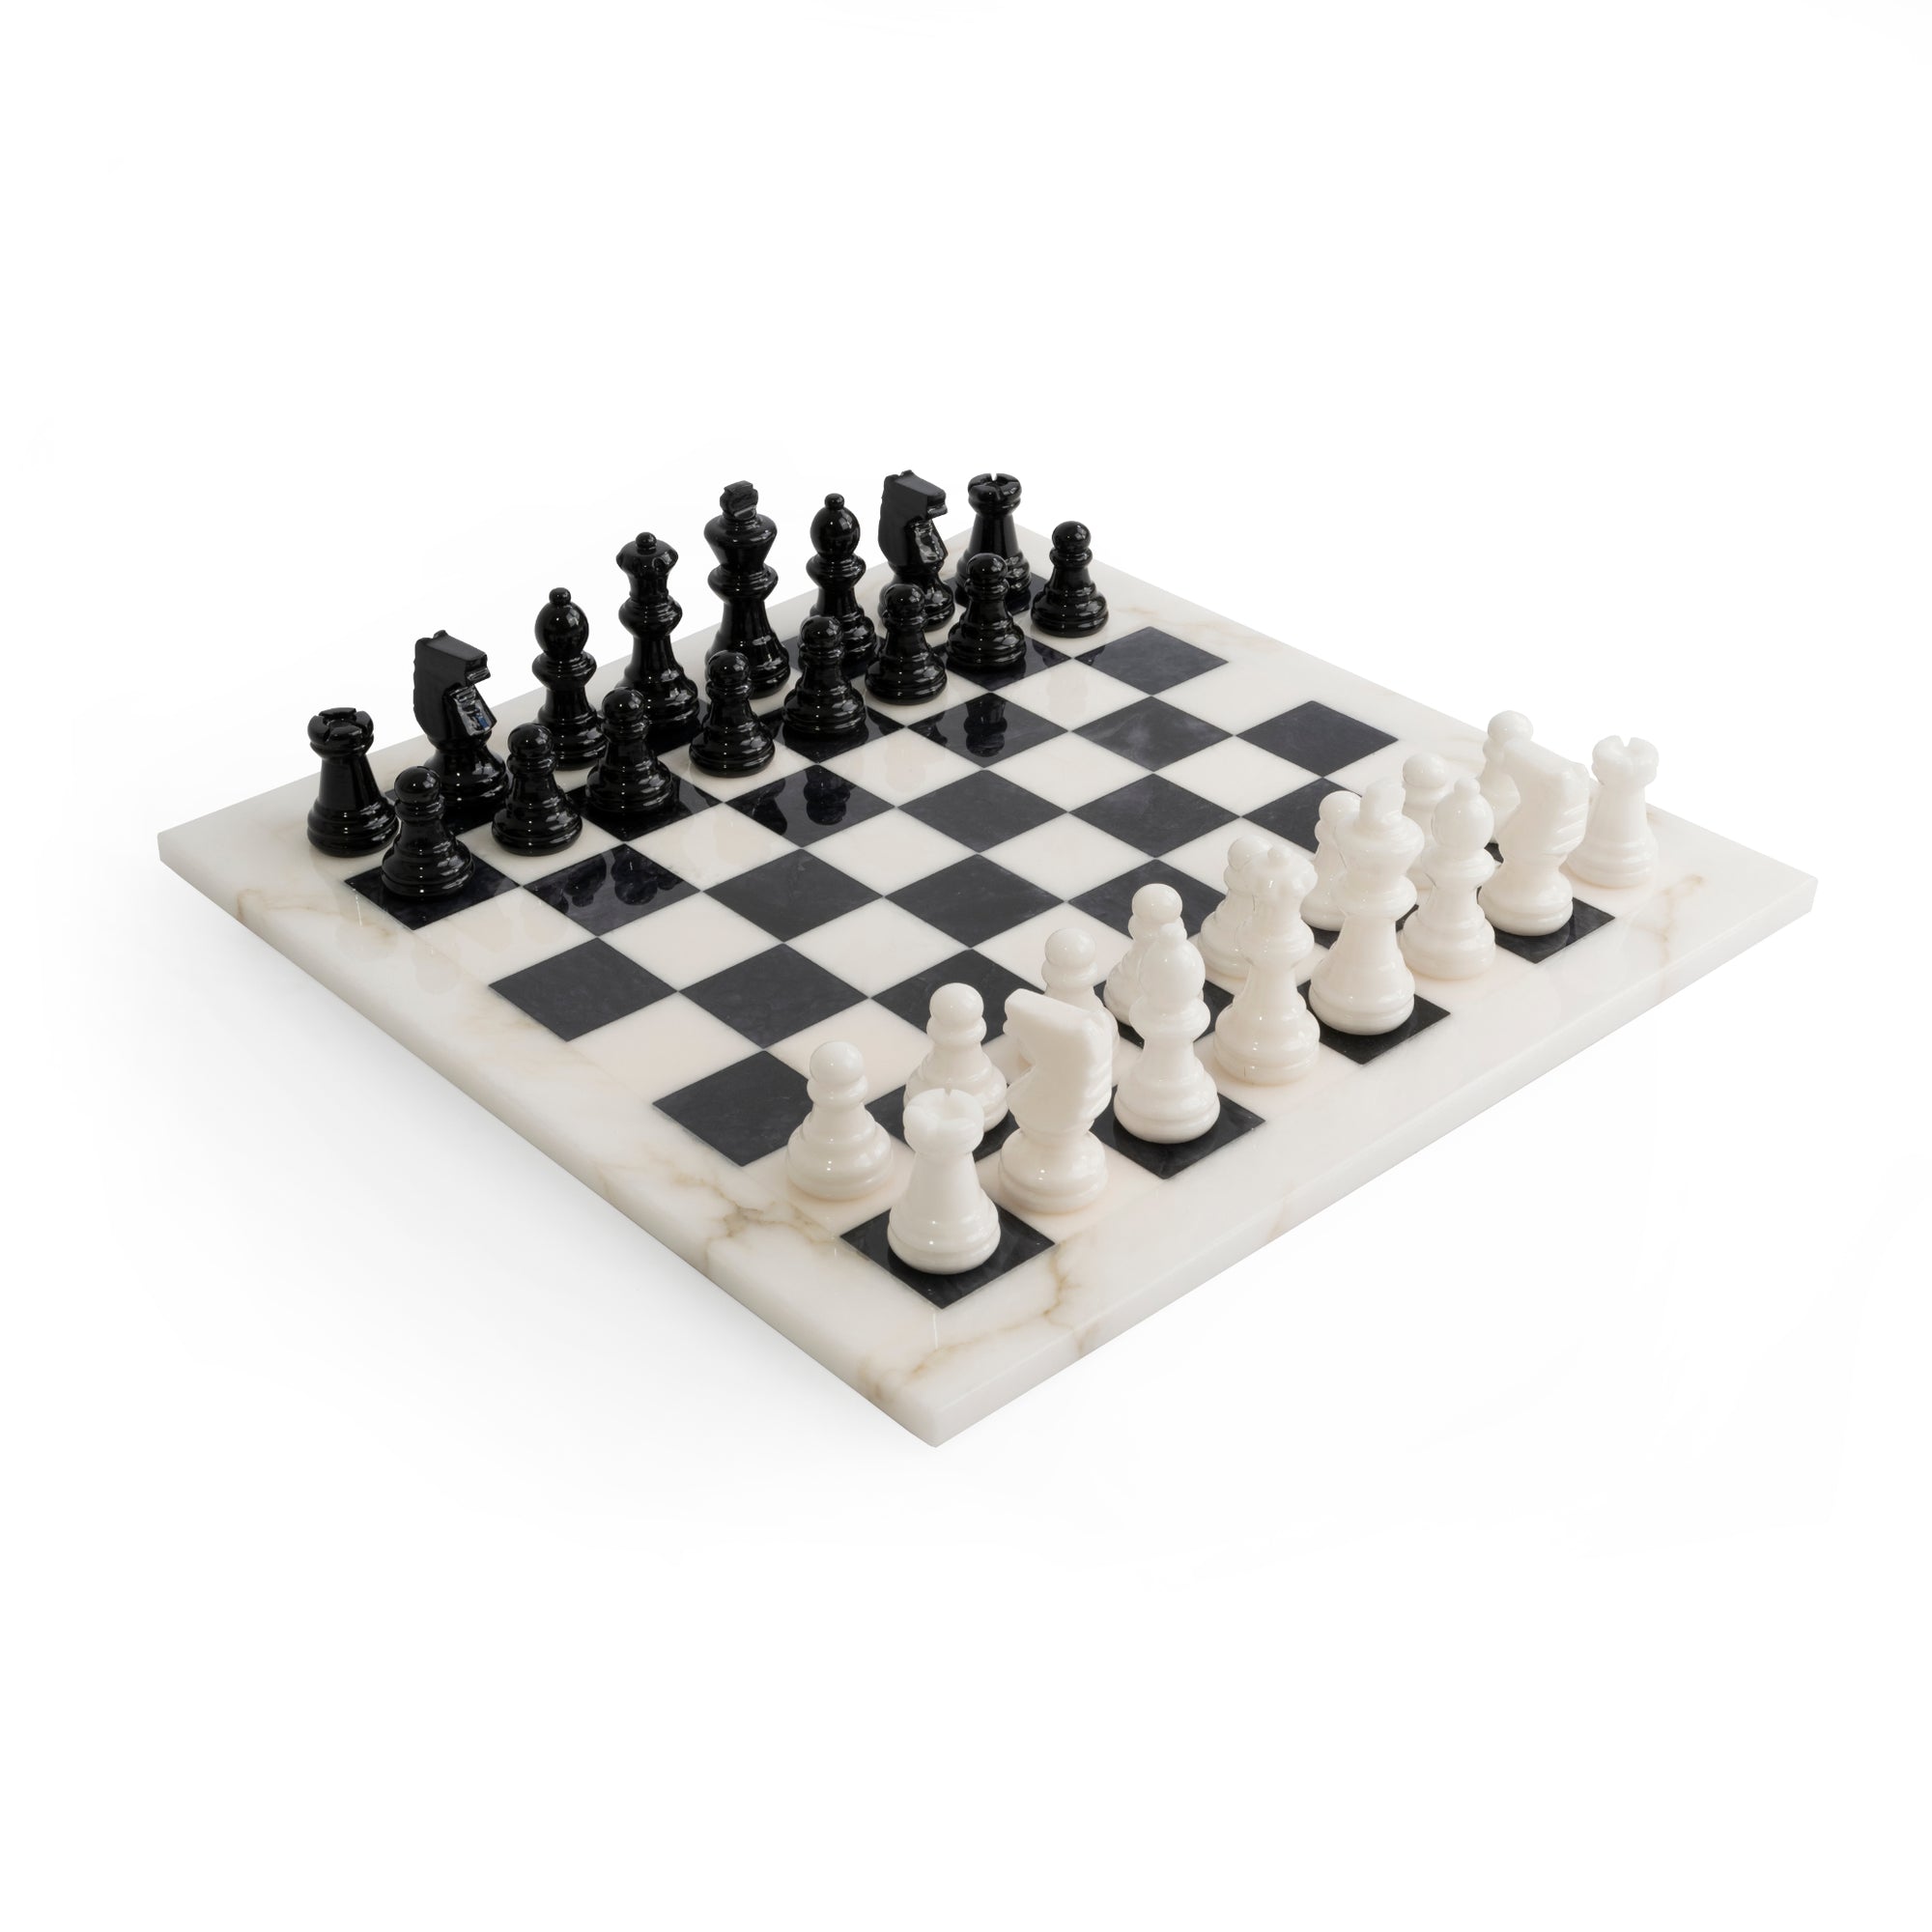 Scali-alabastro-14MF1-Bianco-Nero-alabaster-white-black-marble-stone-quality-chess-set-australia-italian-italy-hand-made-.hero-white.jpg